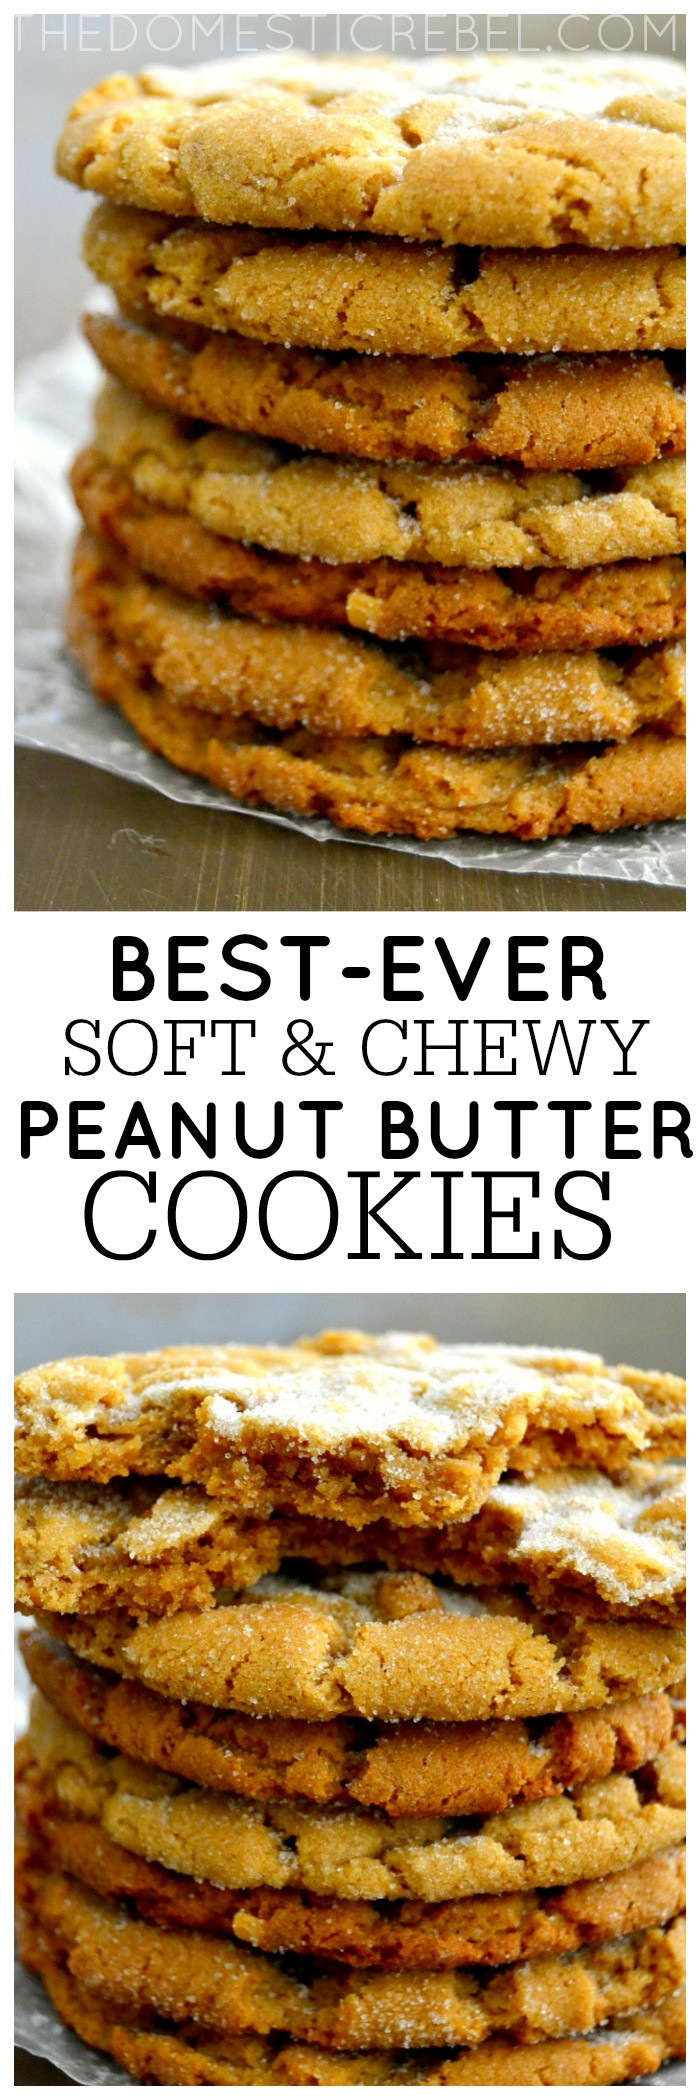 World'S Best Peanut Butter Cookies
 The Best Crisp and Chewy Peanut Butter Cookies Gluten